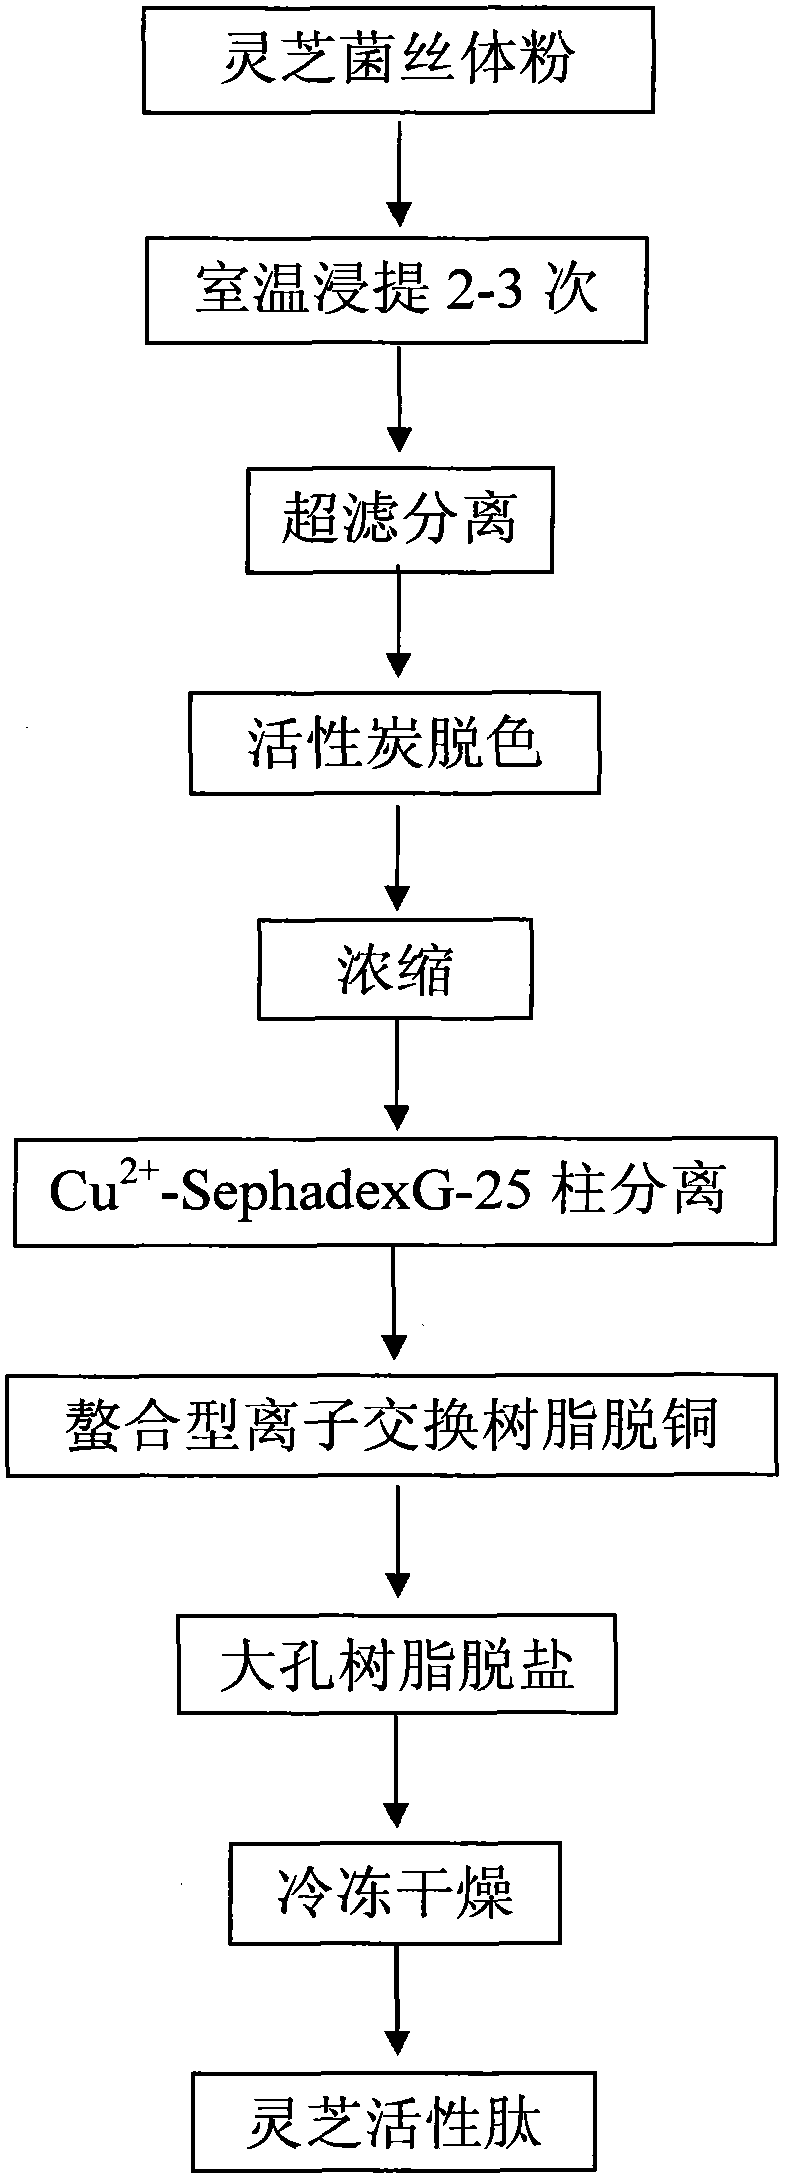 Preparation method of glossy ganoderma bioactive peptide